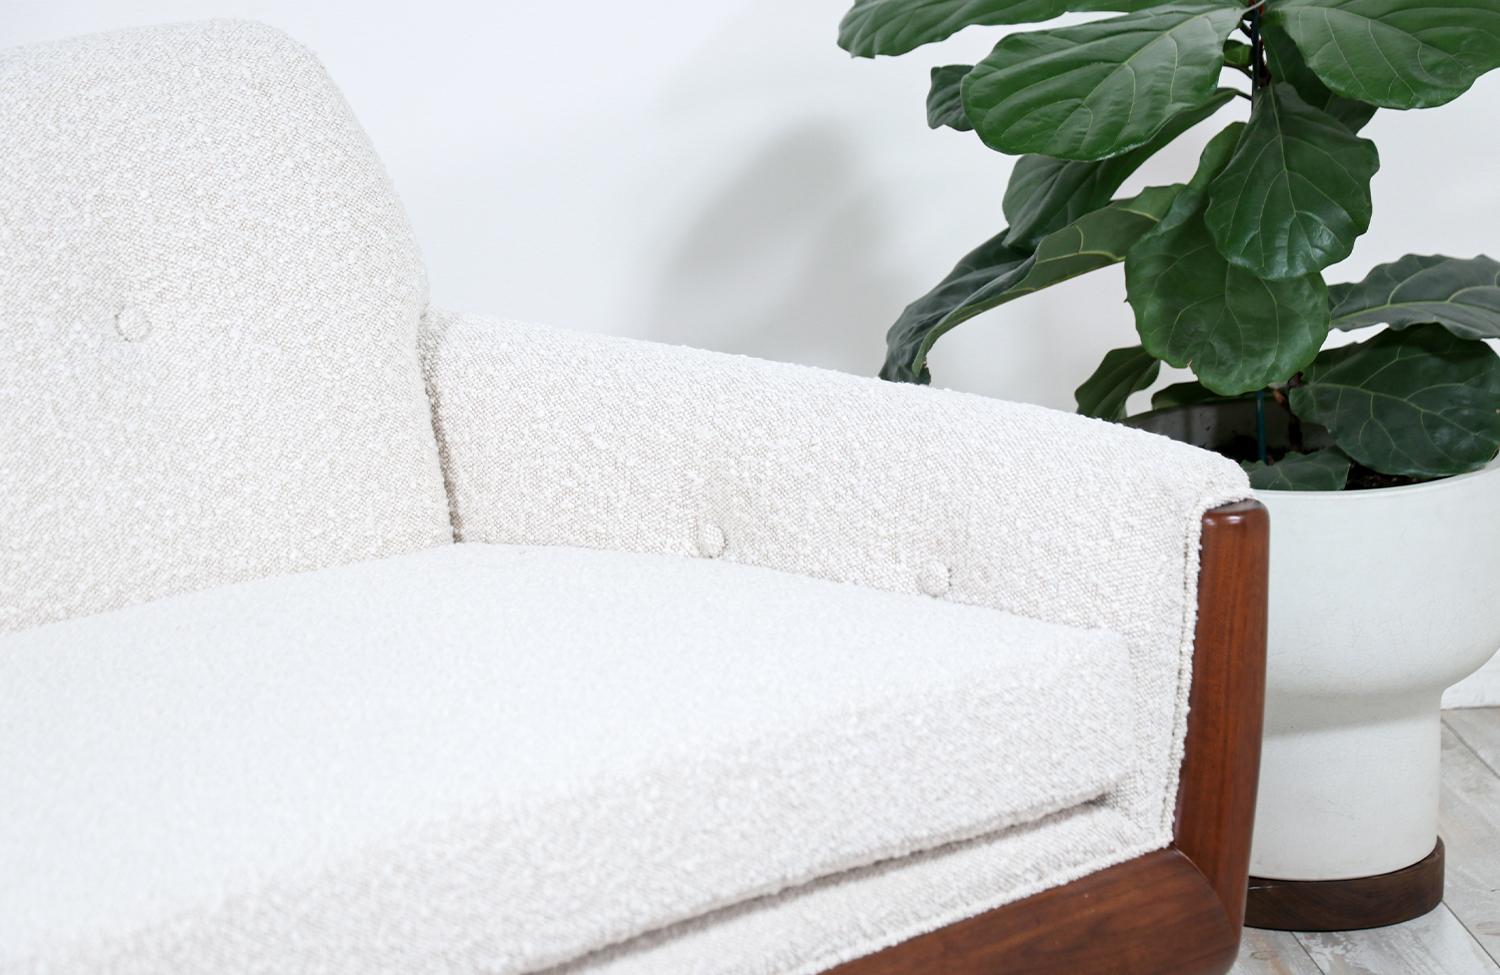 Foam Adrian Pearsall Sculpted Walnut & Boucle Tweed Sofa for Craft Associates